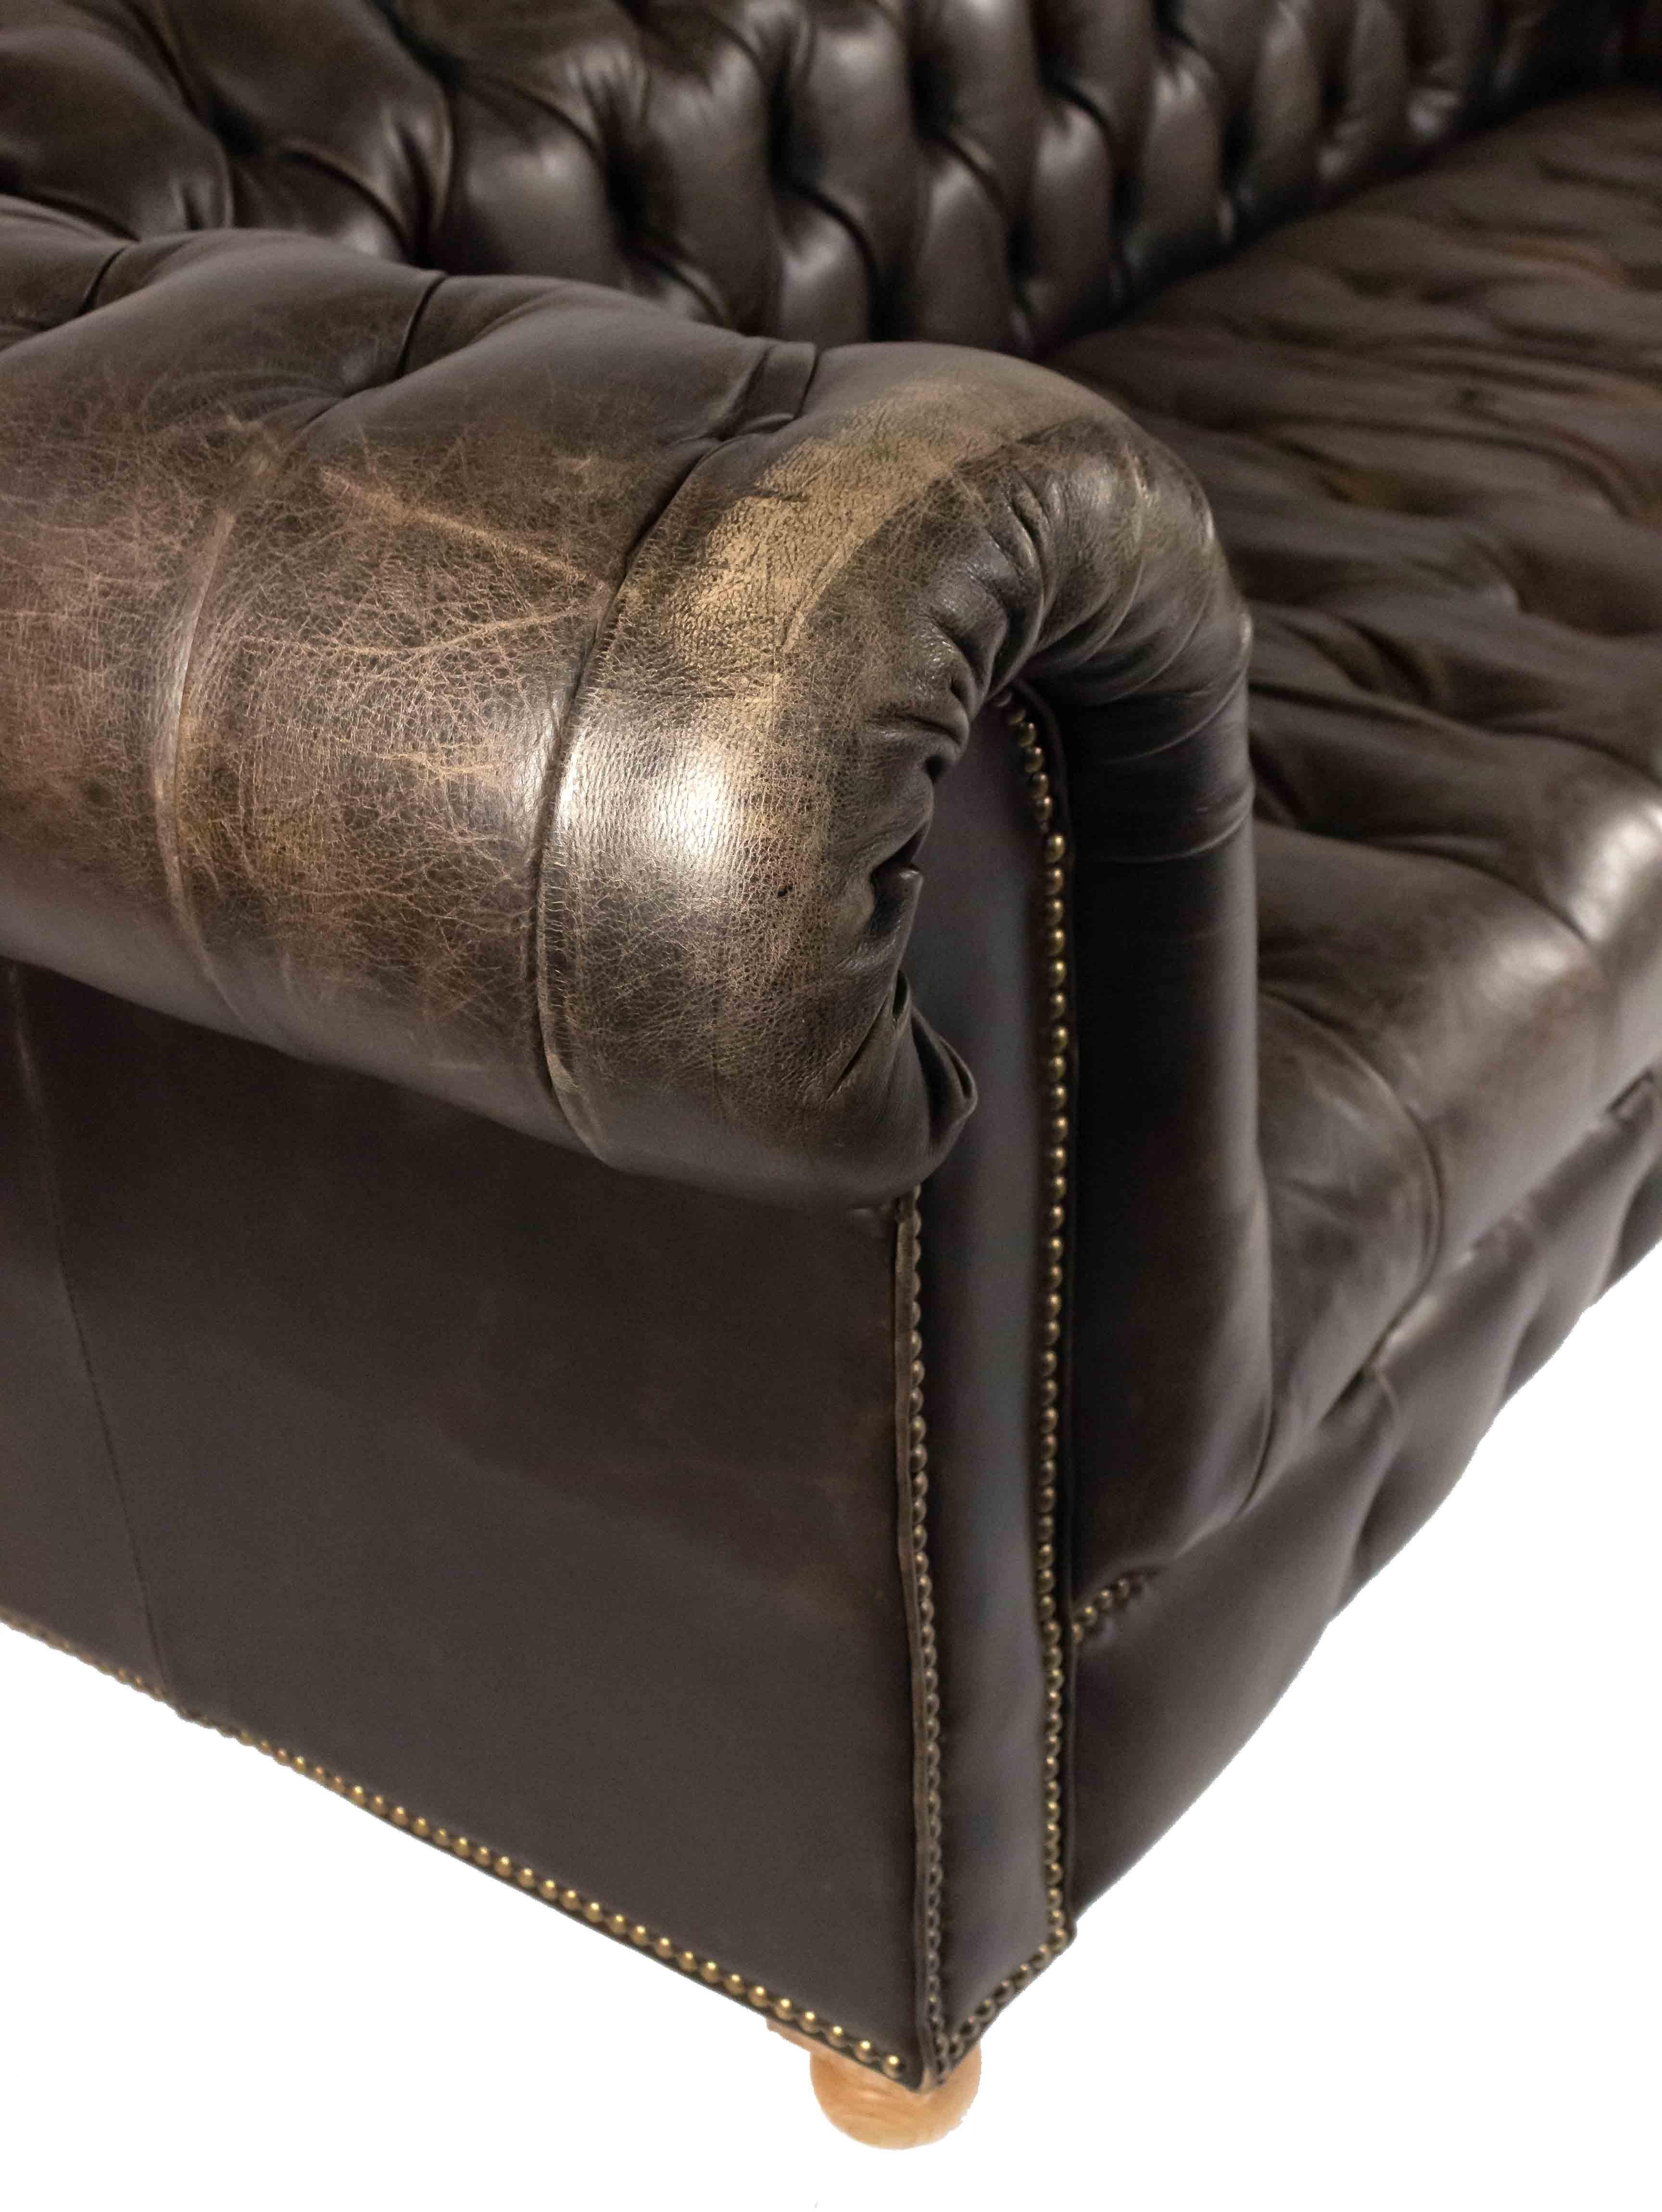 Brass Dark Brown Leather Chesterfield Sofa